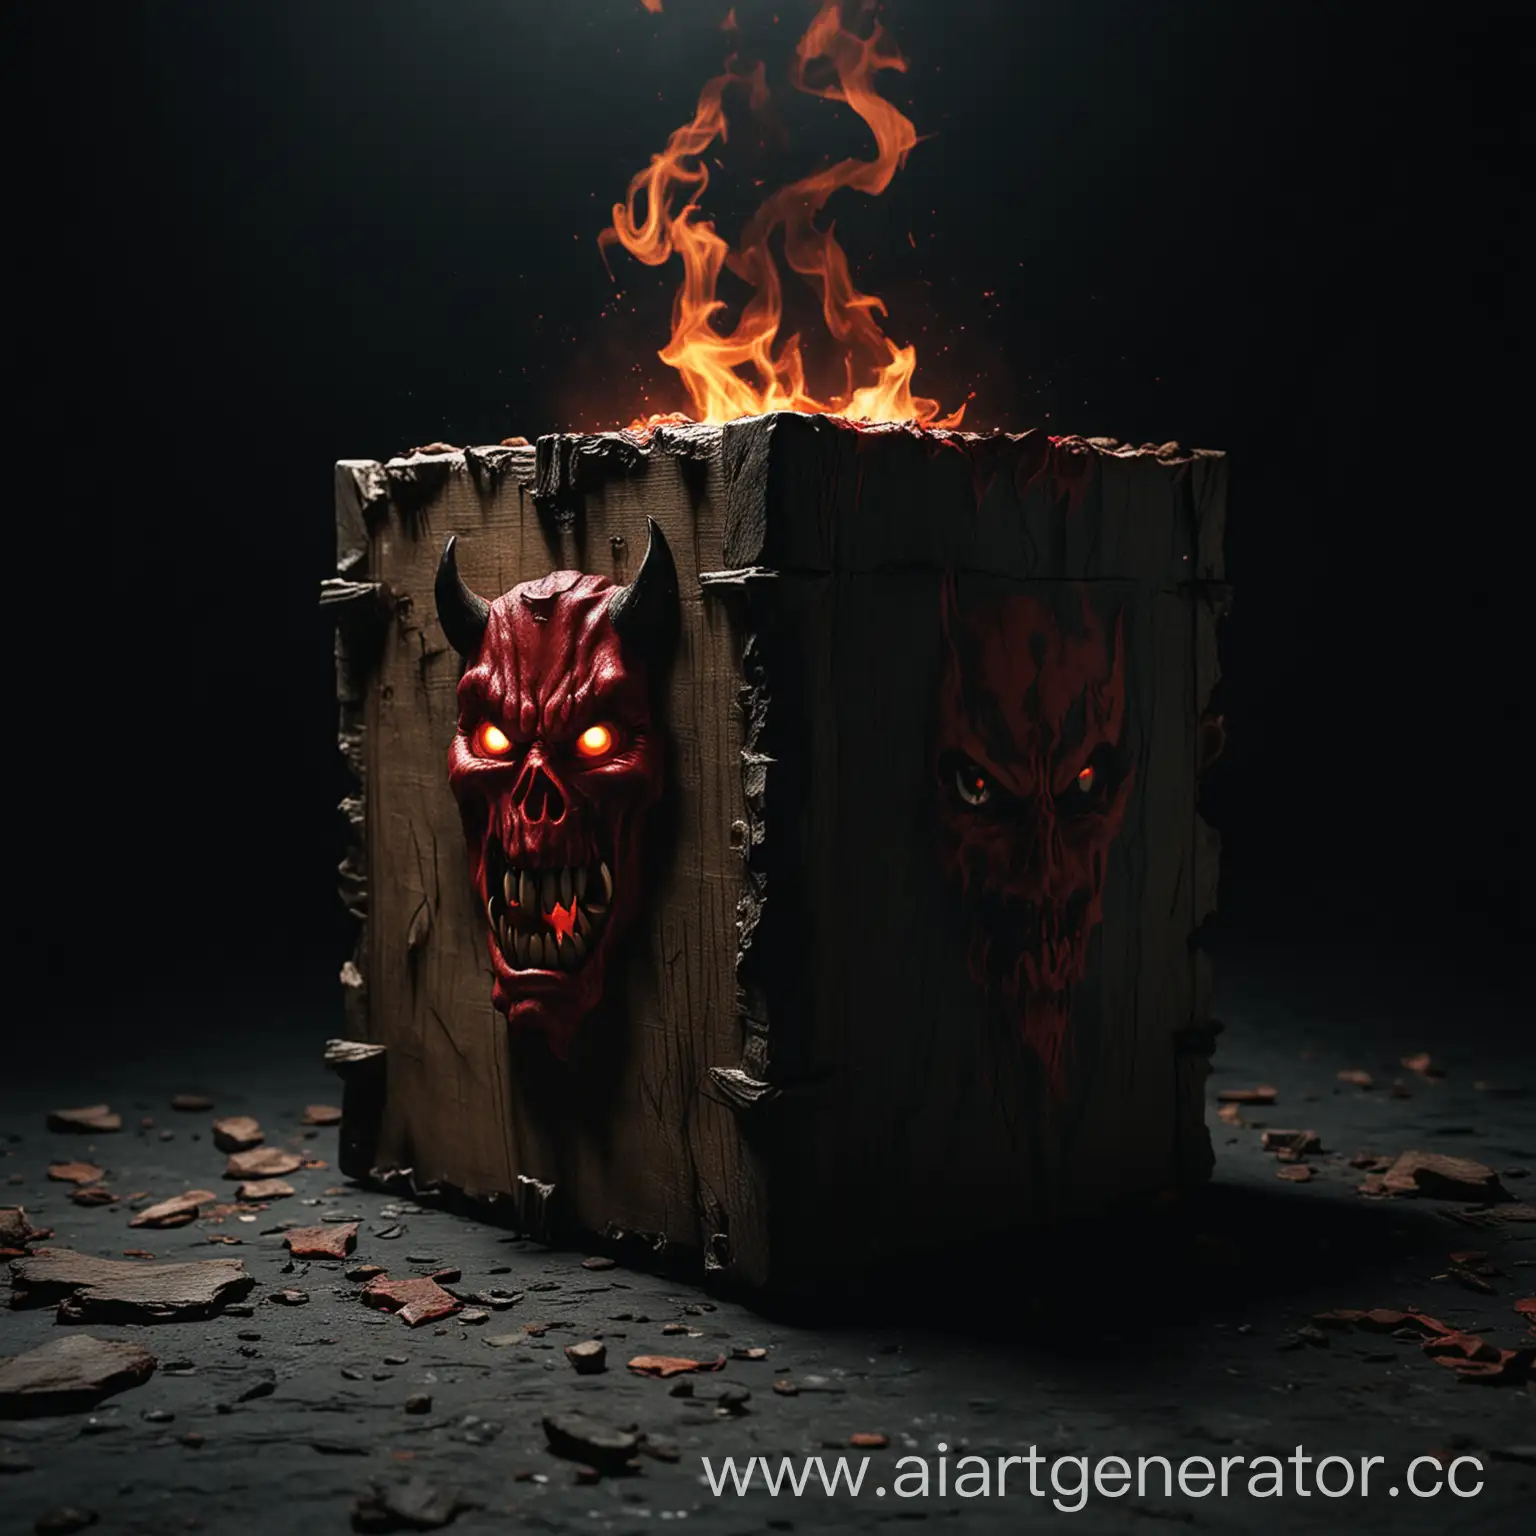 Eerie-Devils-Box-Illuminated-in-4K-Against-a-Dark-Background